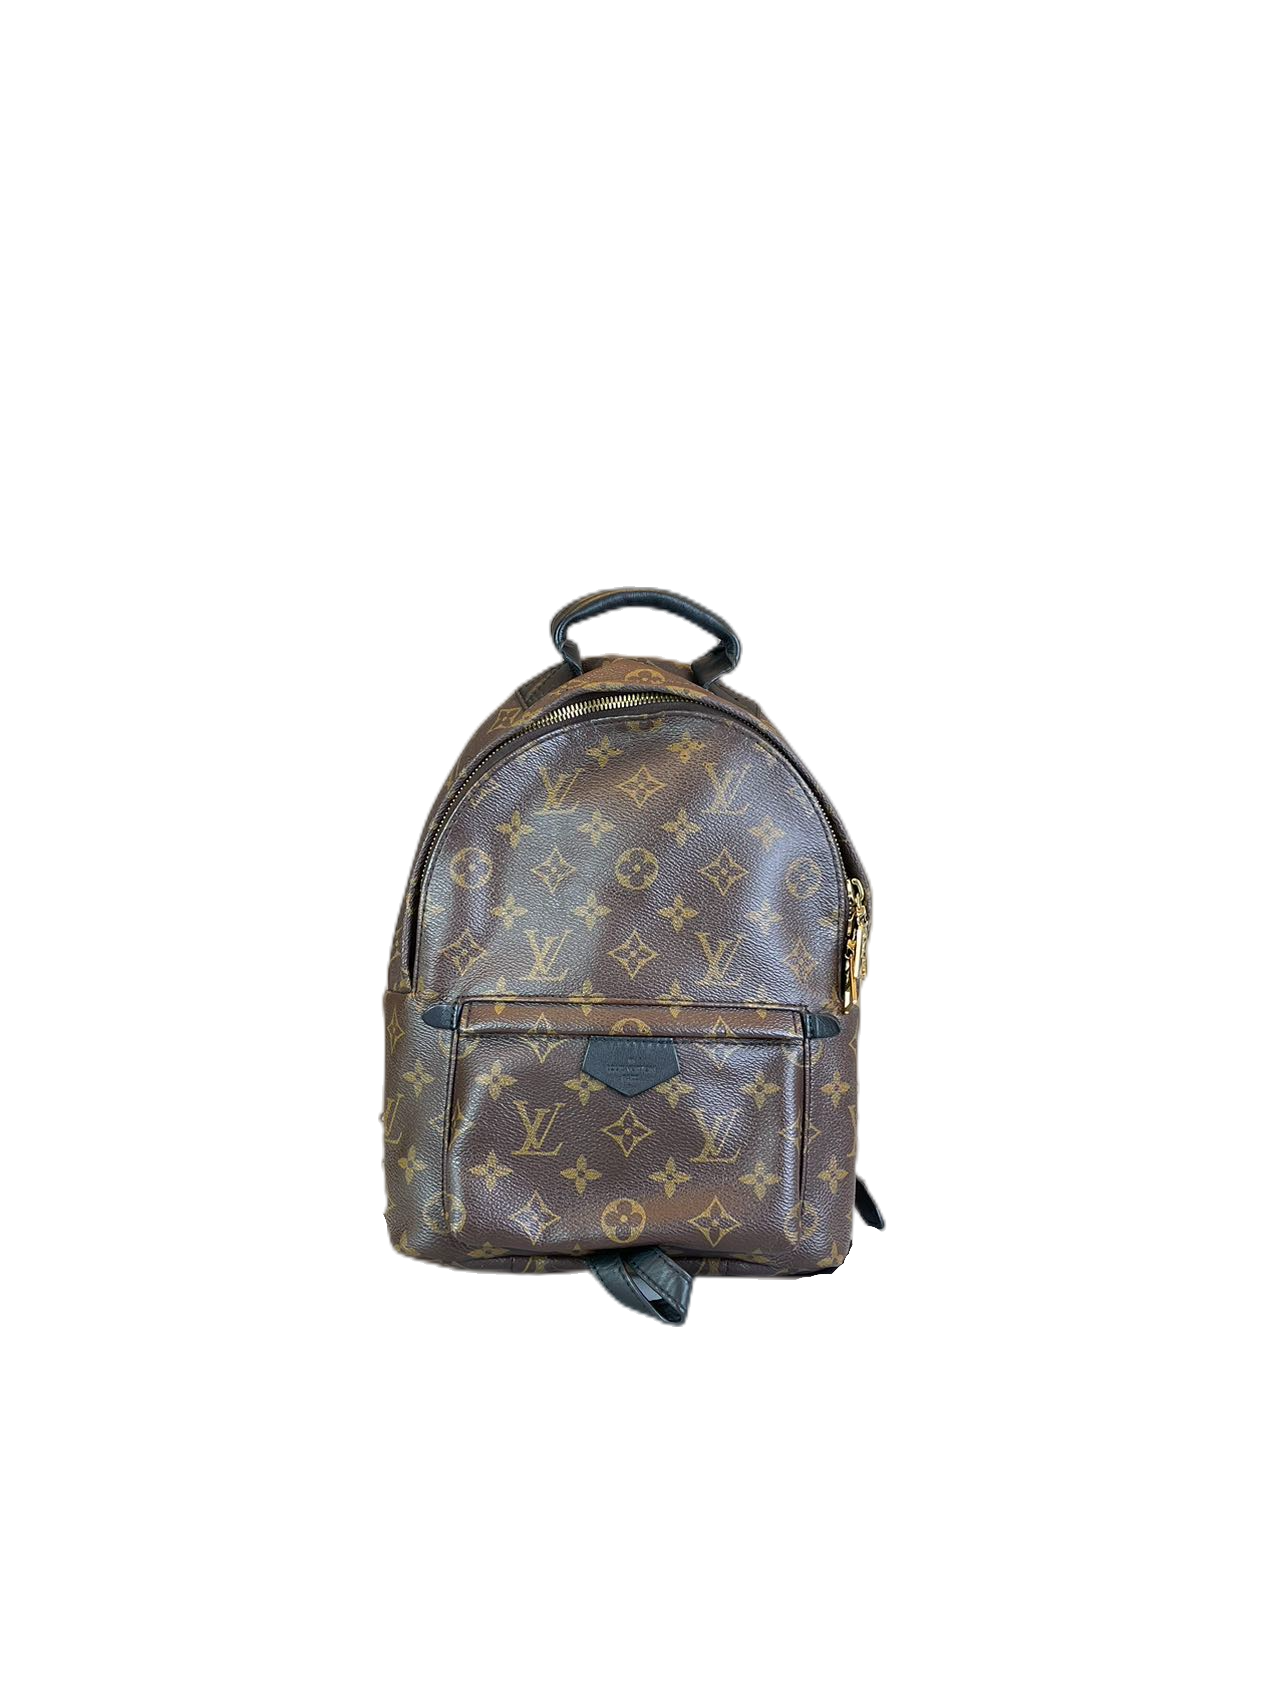 Preloved Louis Vuitton Monogram Canvas Medium Palm Spring Backpack